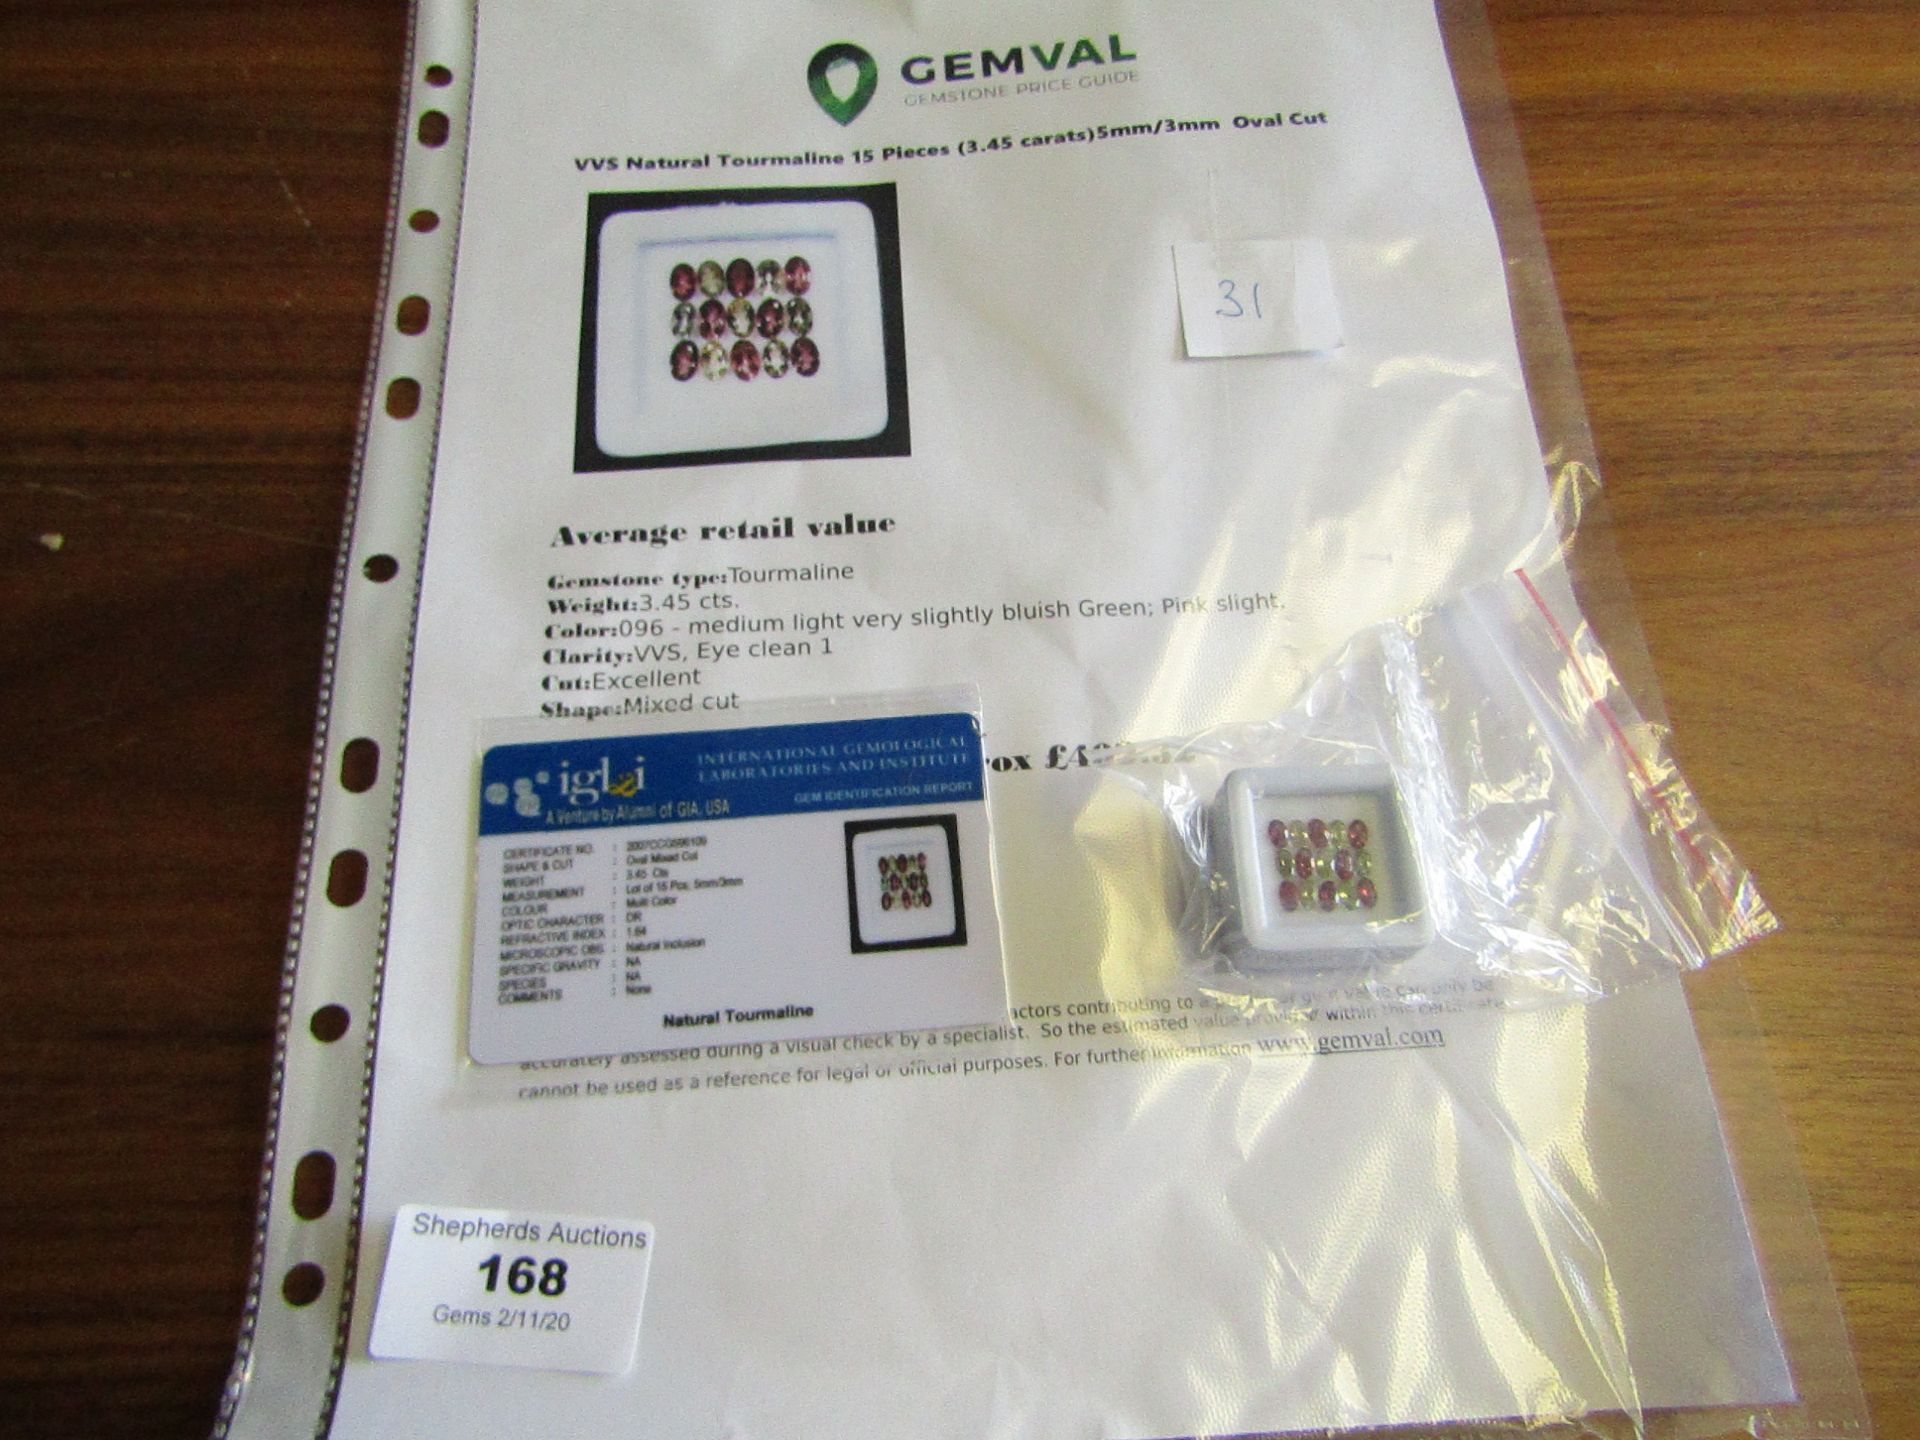 Natural Tourmaline - 3.45 carats - 15 pieces - Average retail value £ 402.32 - Image 2 of 2